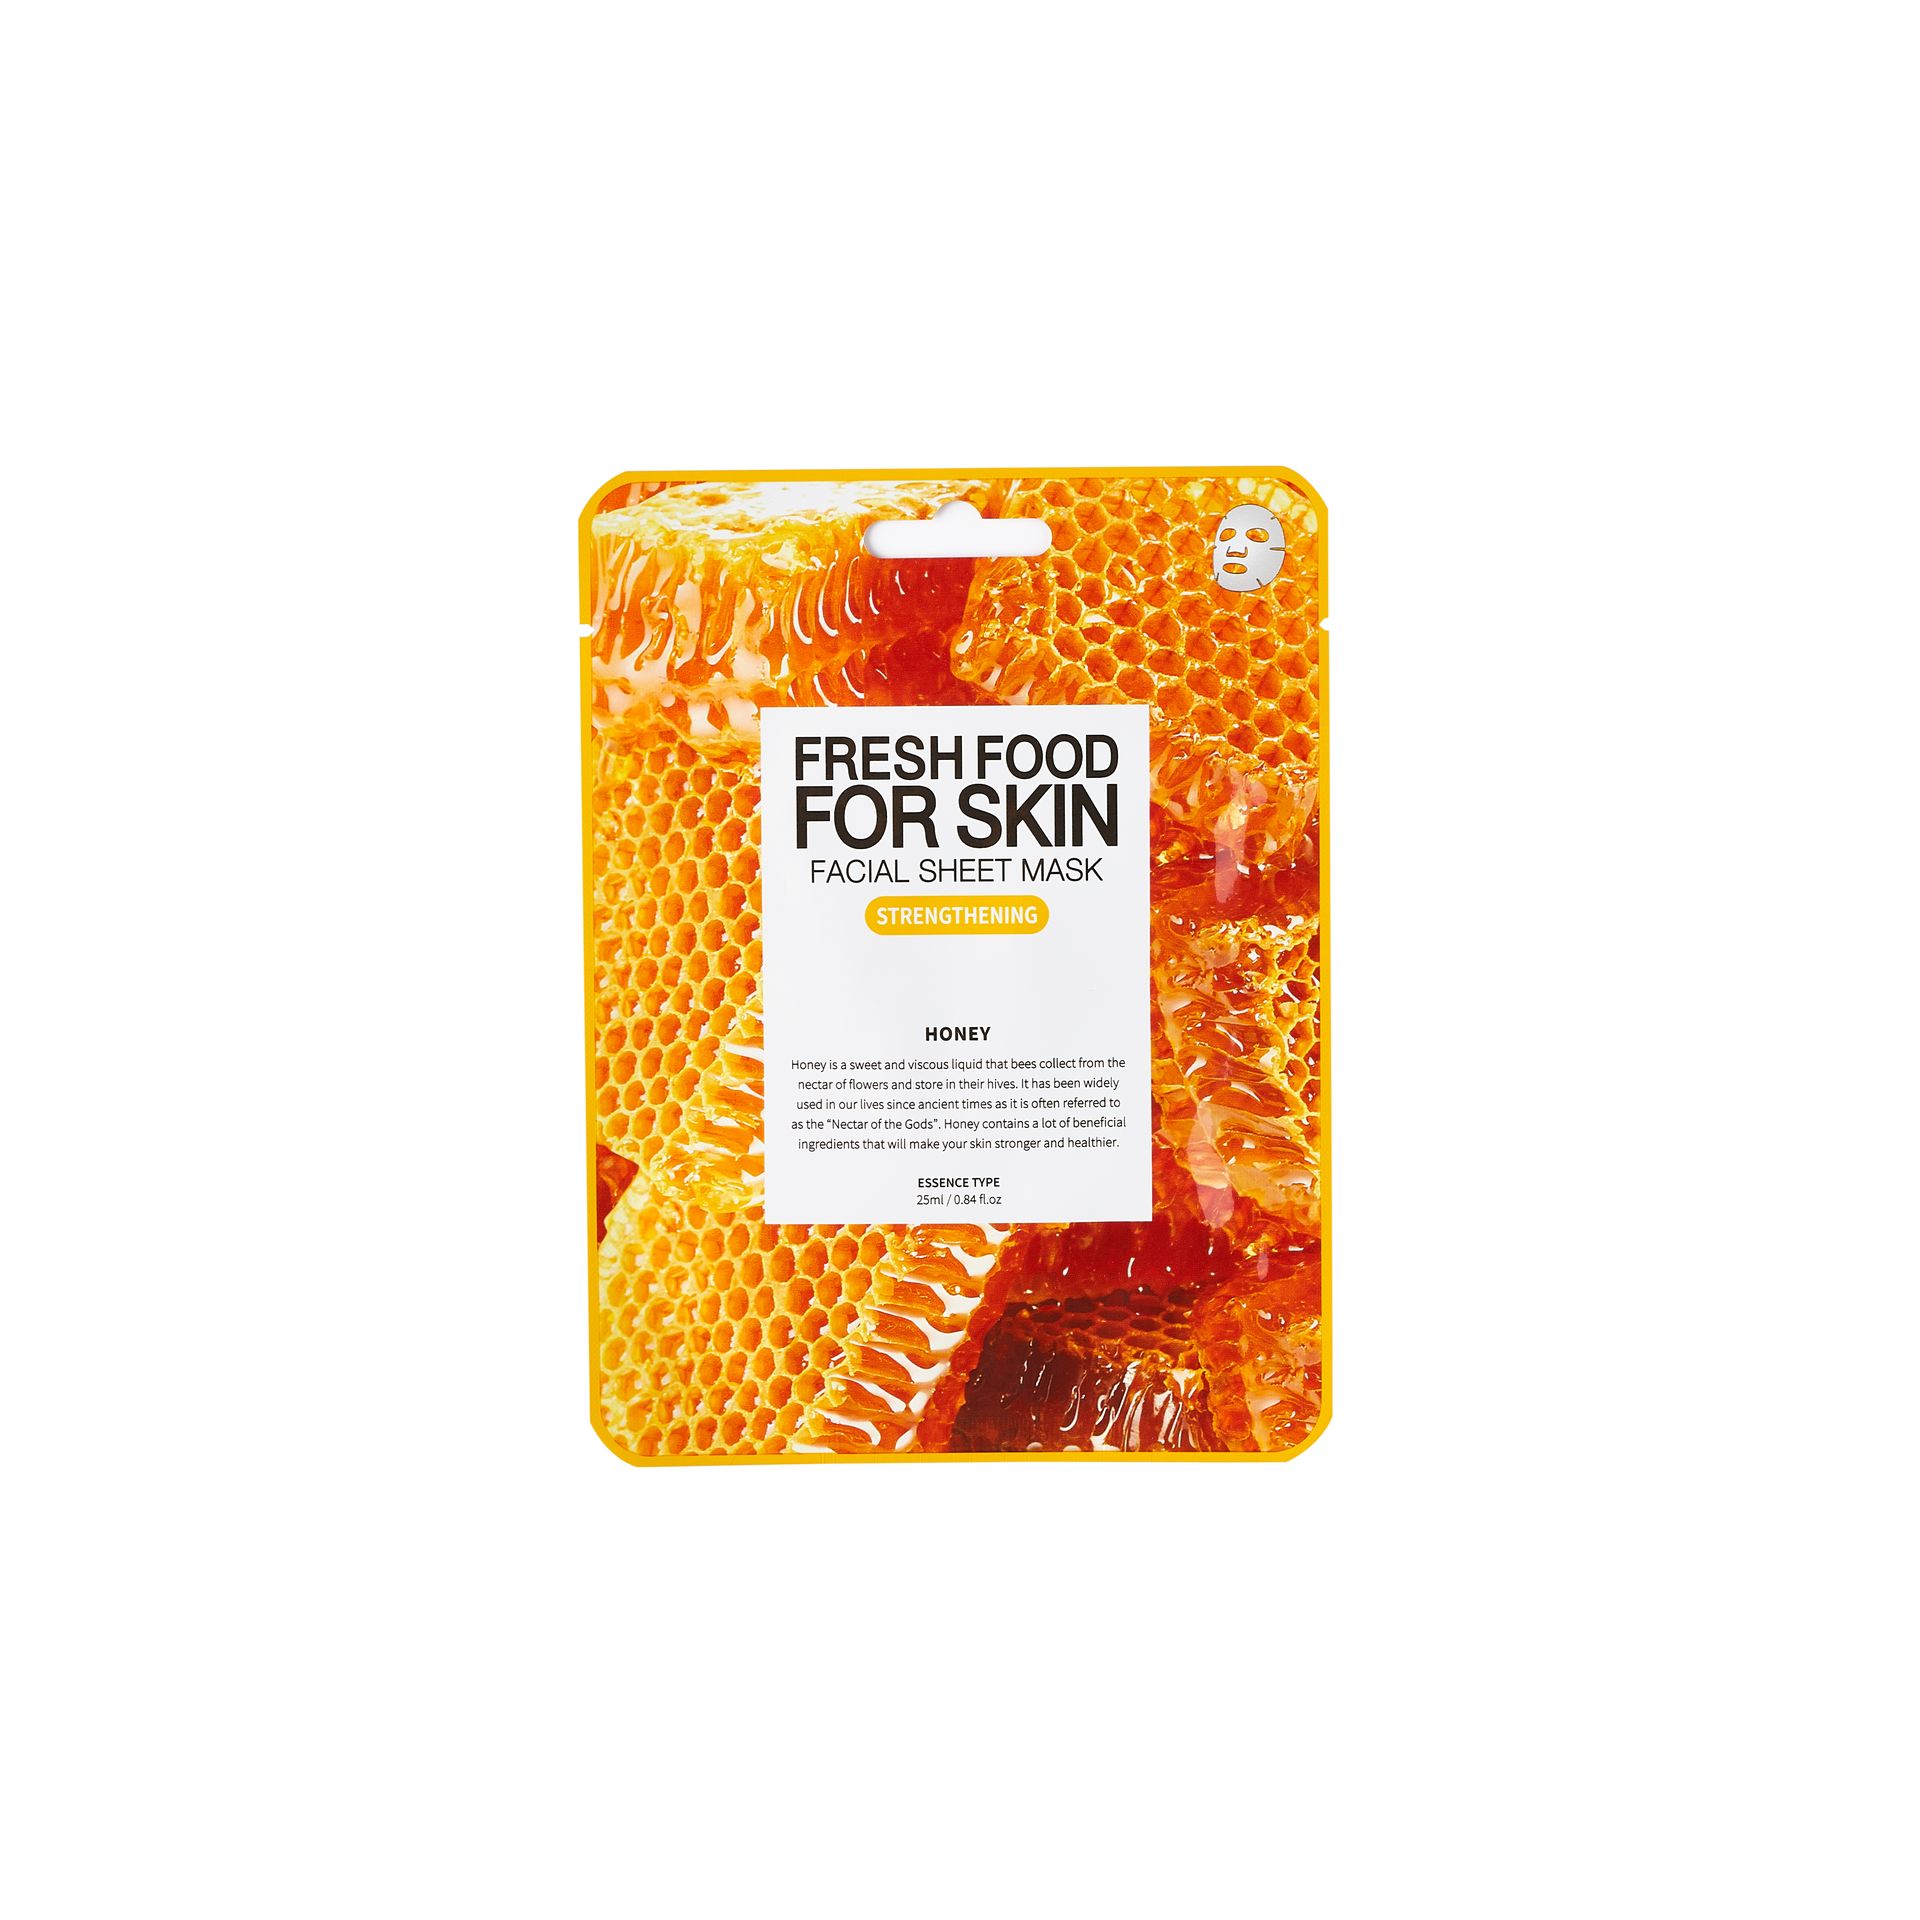 Freshfood For Skin Facial Sheet Mask (Honey)